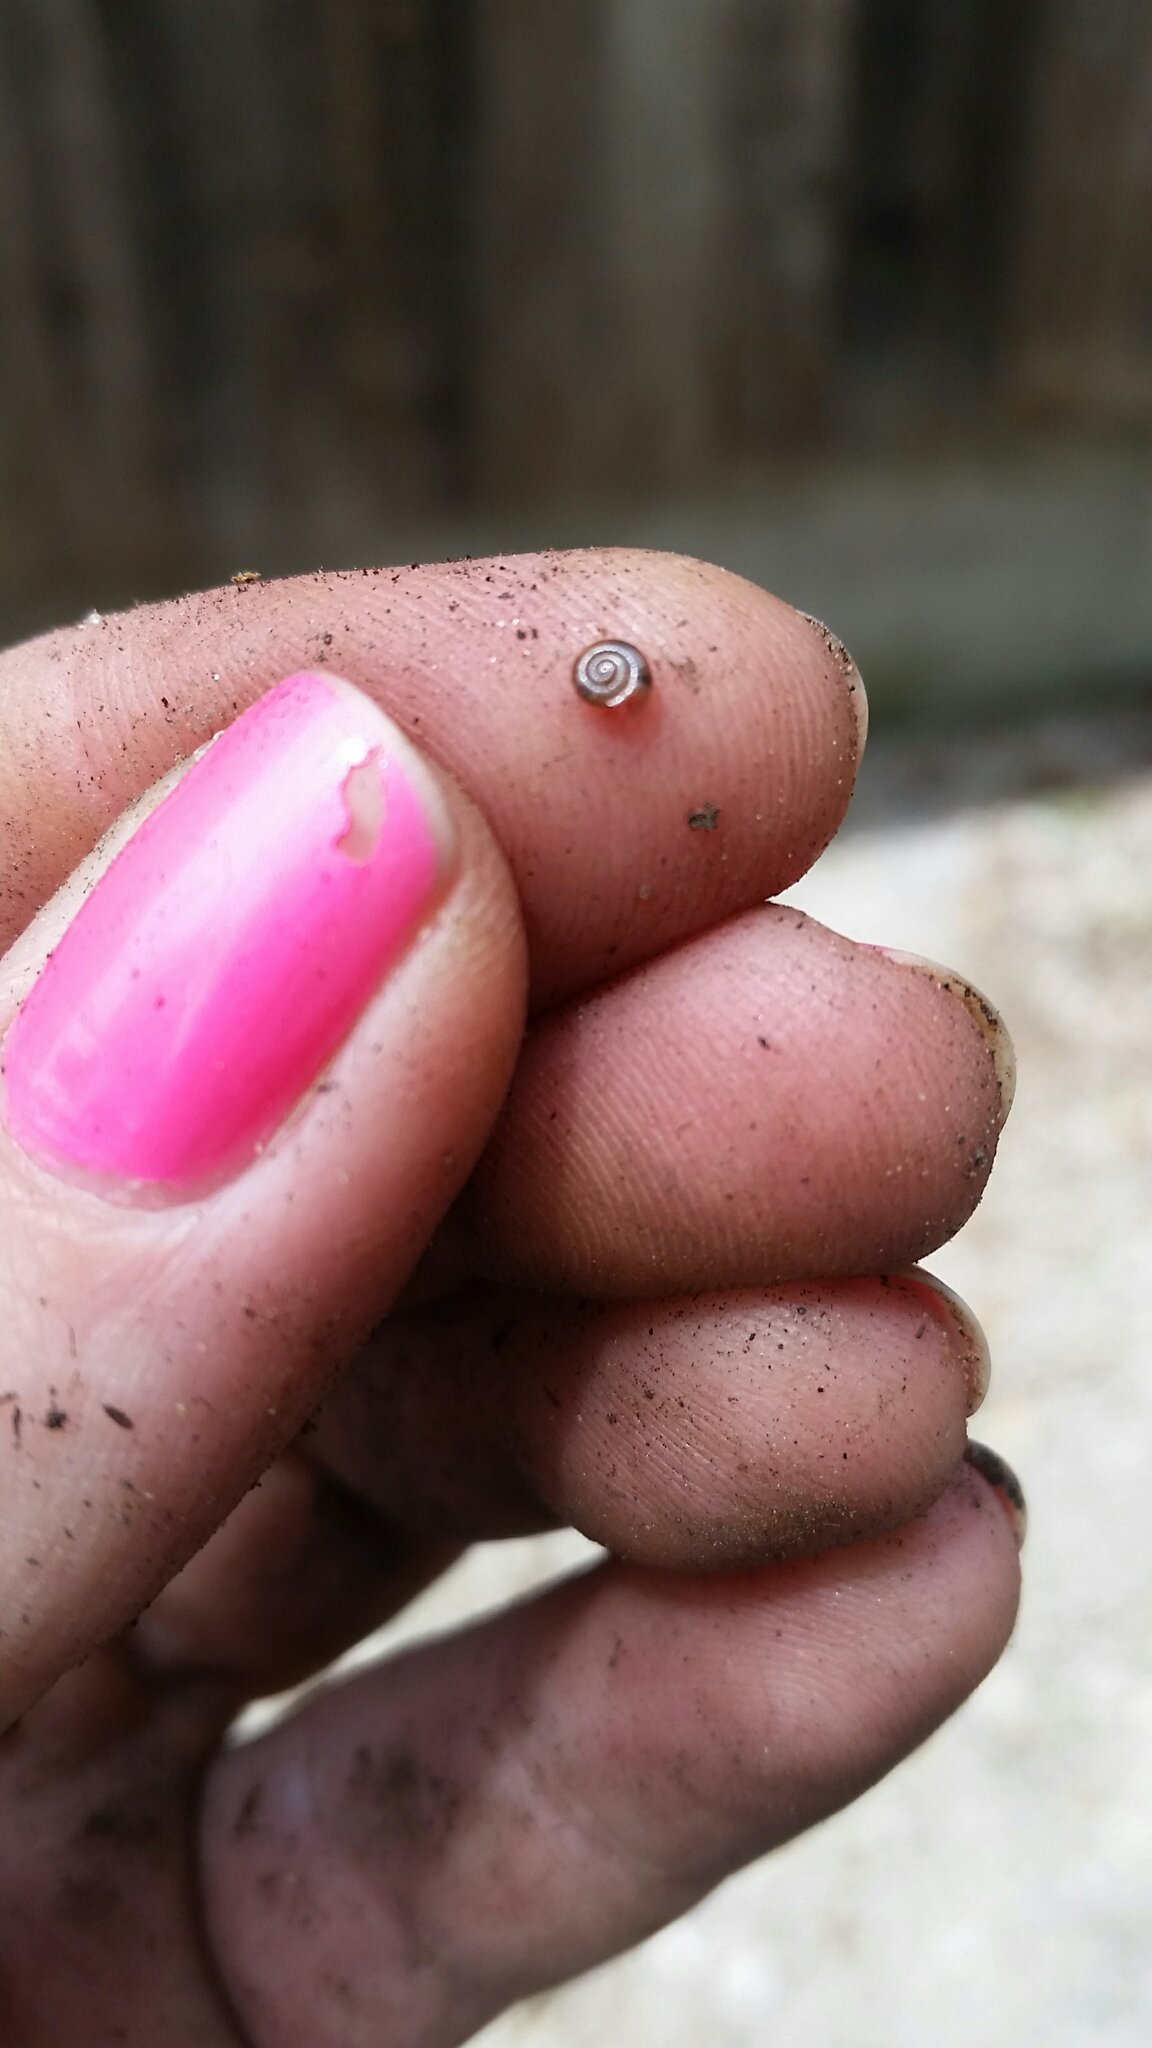 Found the teeniest snail while gardening - meme